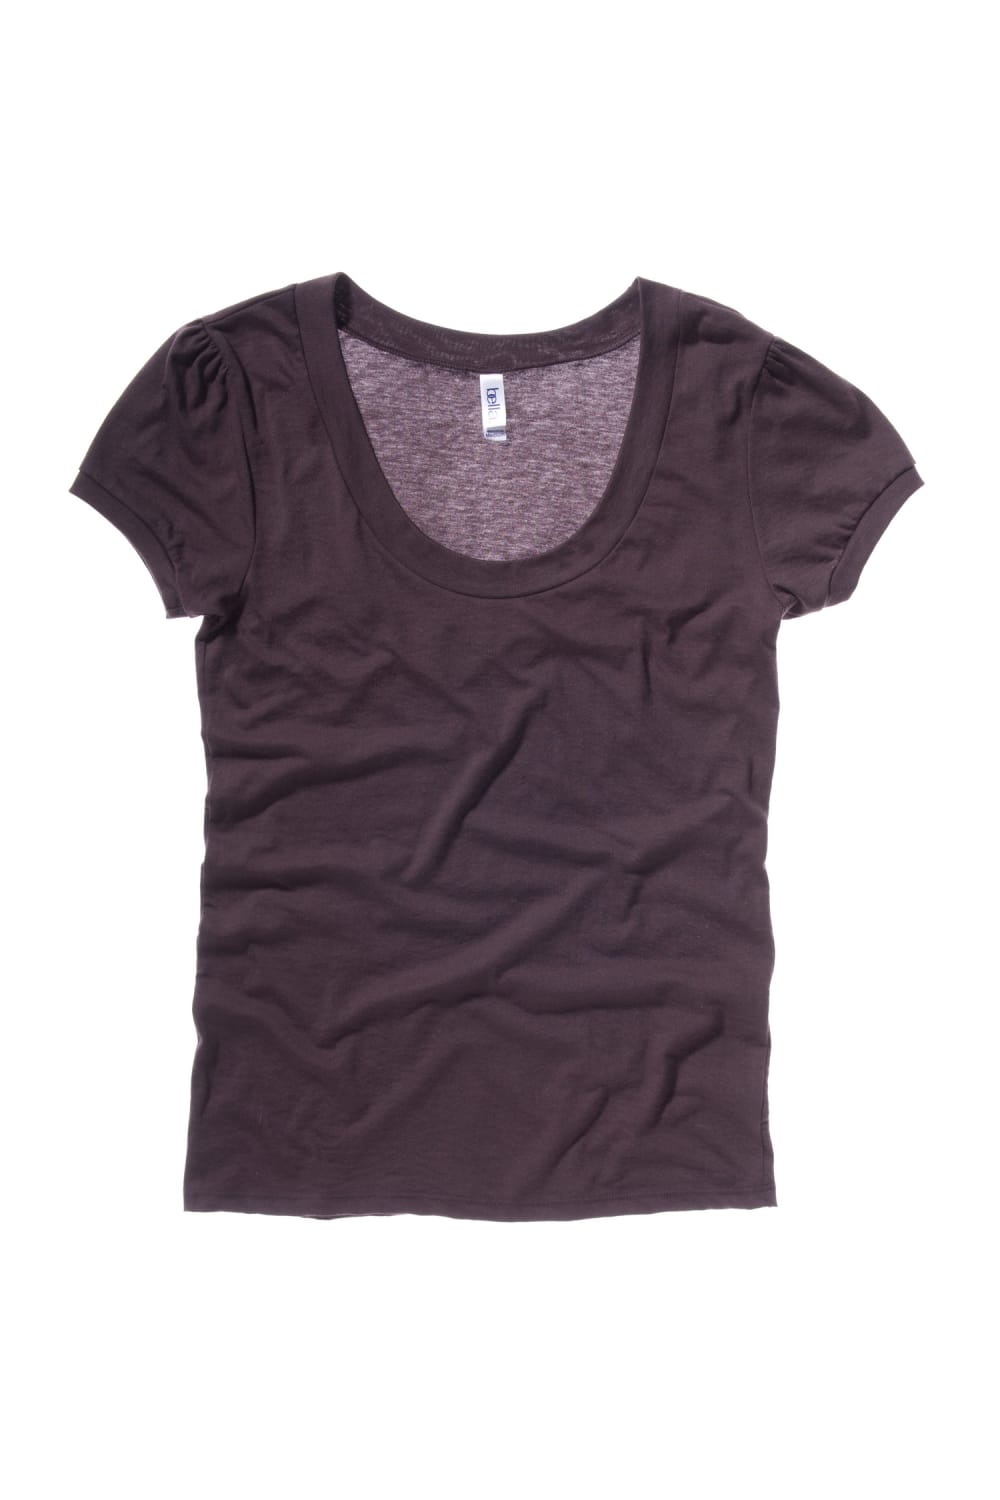 Bella + Canvas Womens/Ladies Vintage Jersey Scoop Neck Short Sleeve T-Shirt (Chocolate)